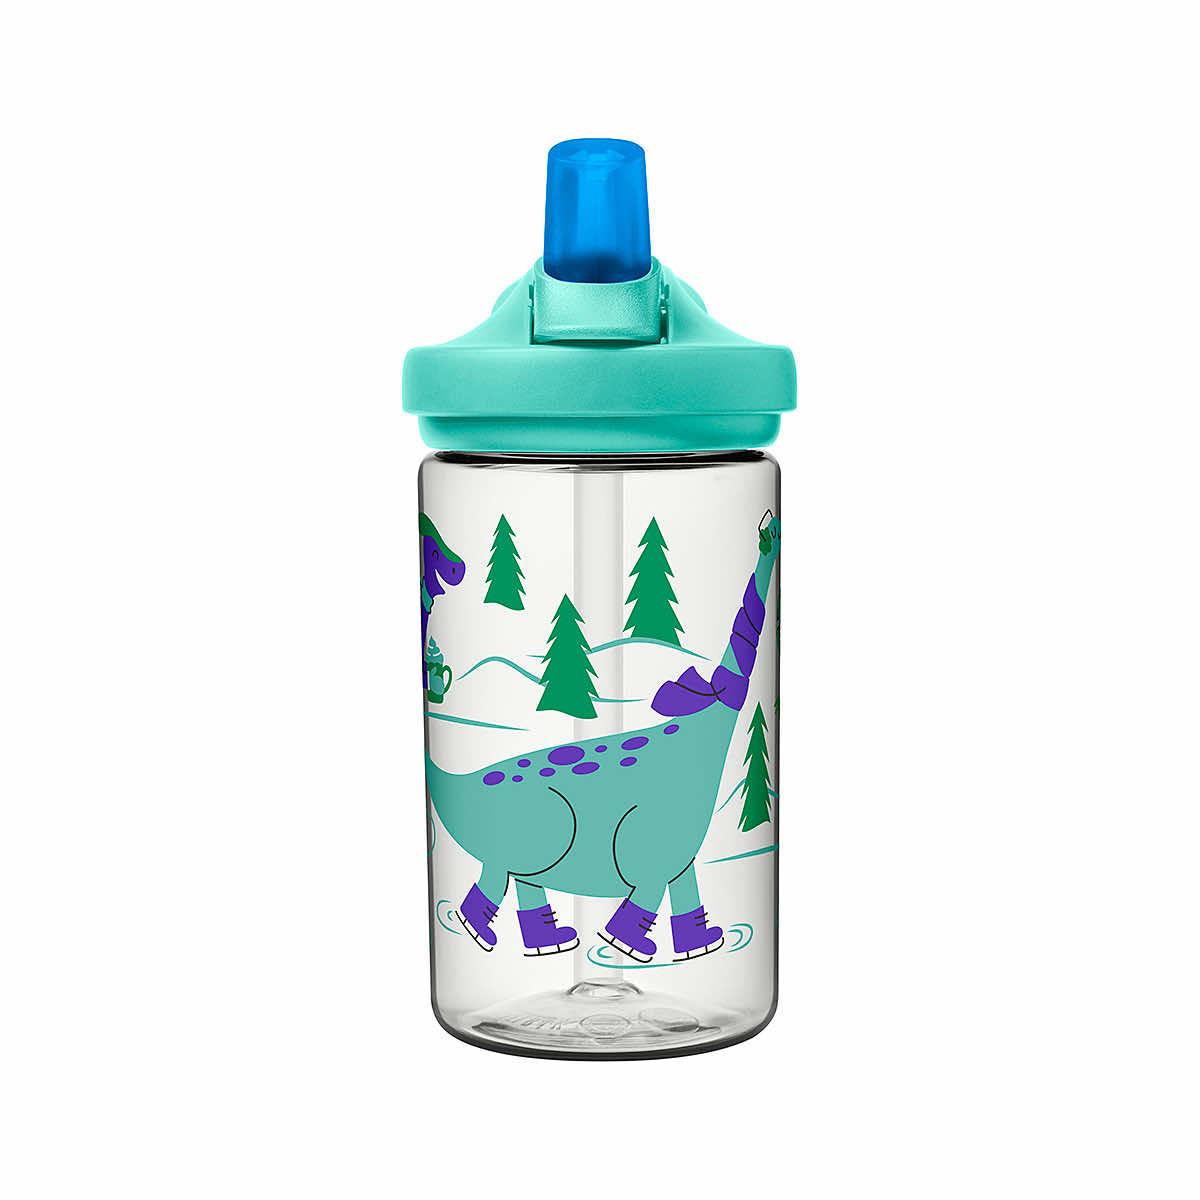 Camelbak Eddy+ Kids' Water Bottle - Hip Dinos, 14 oz - Pay Less